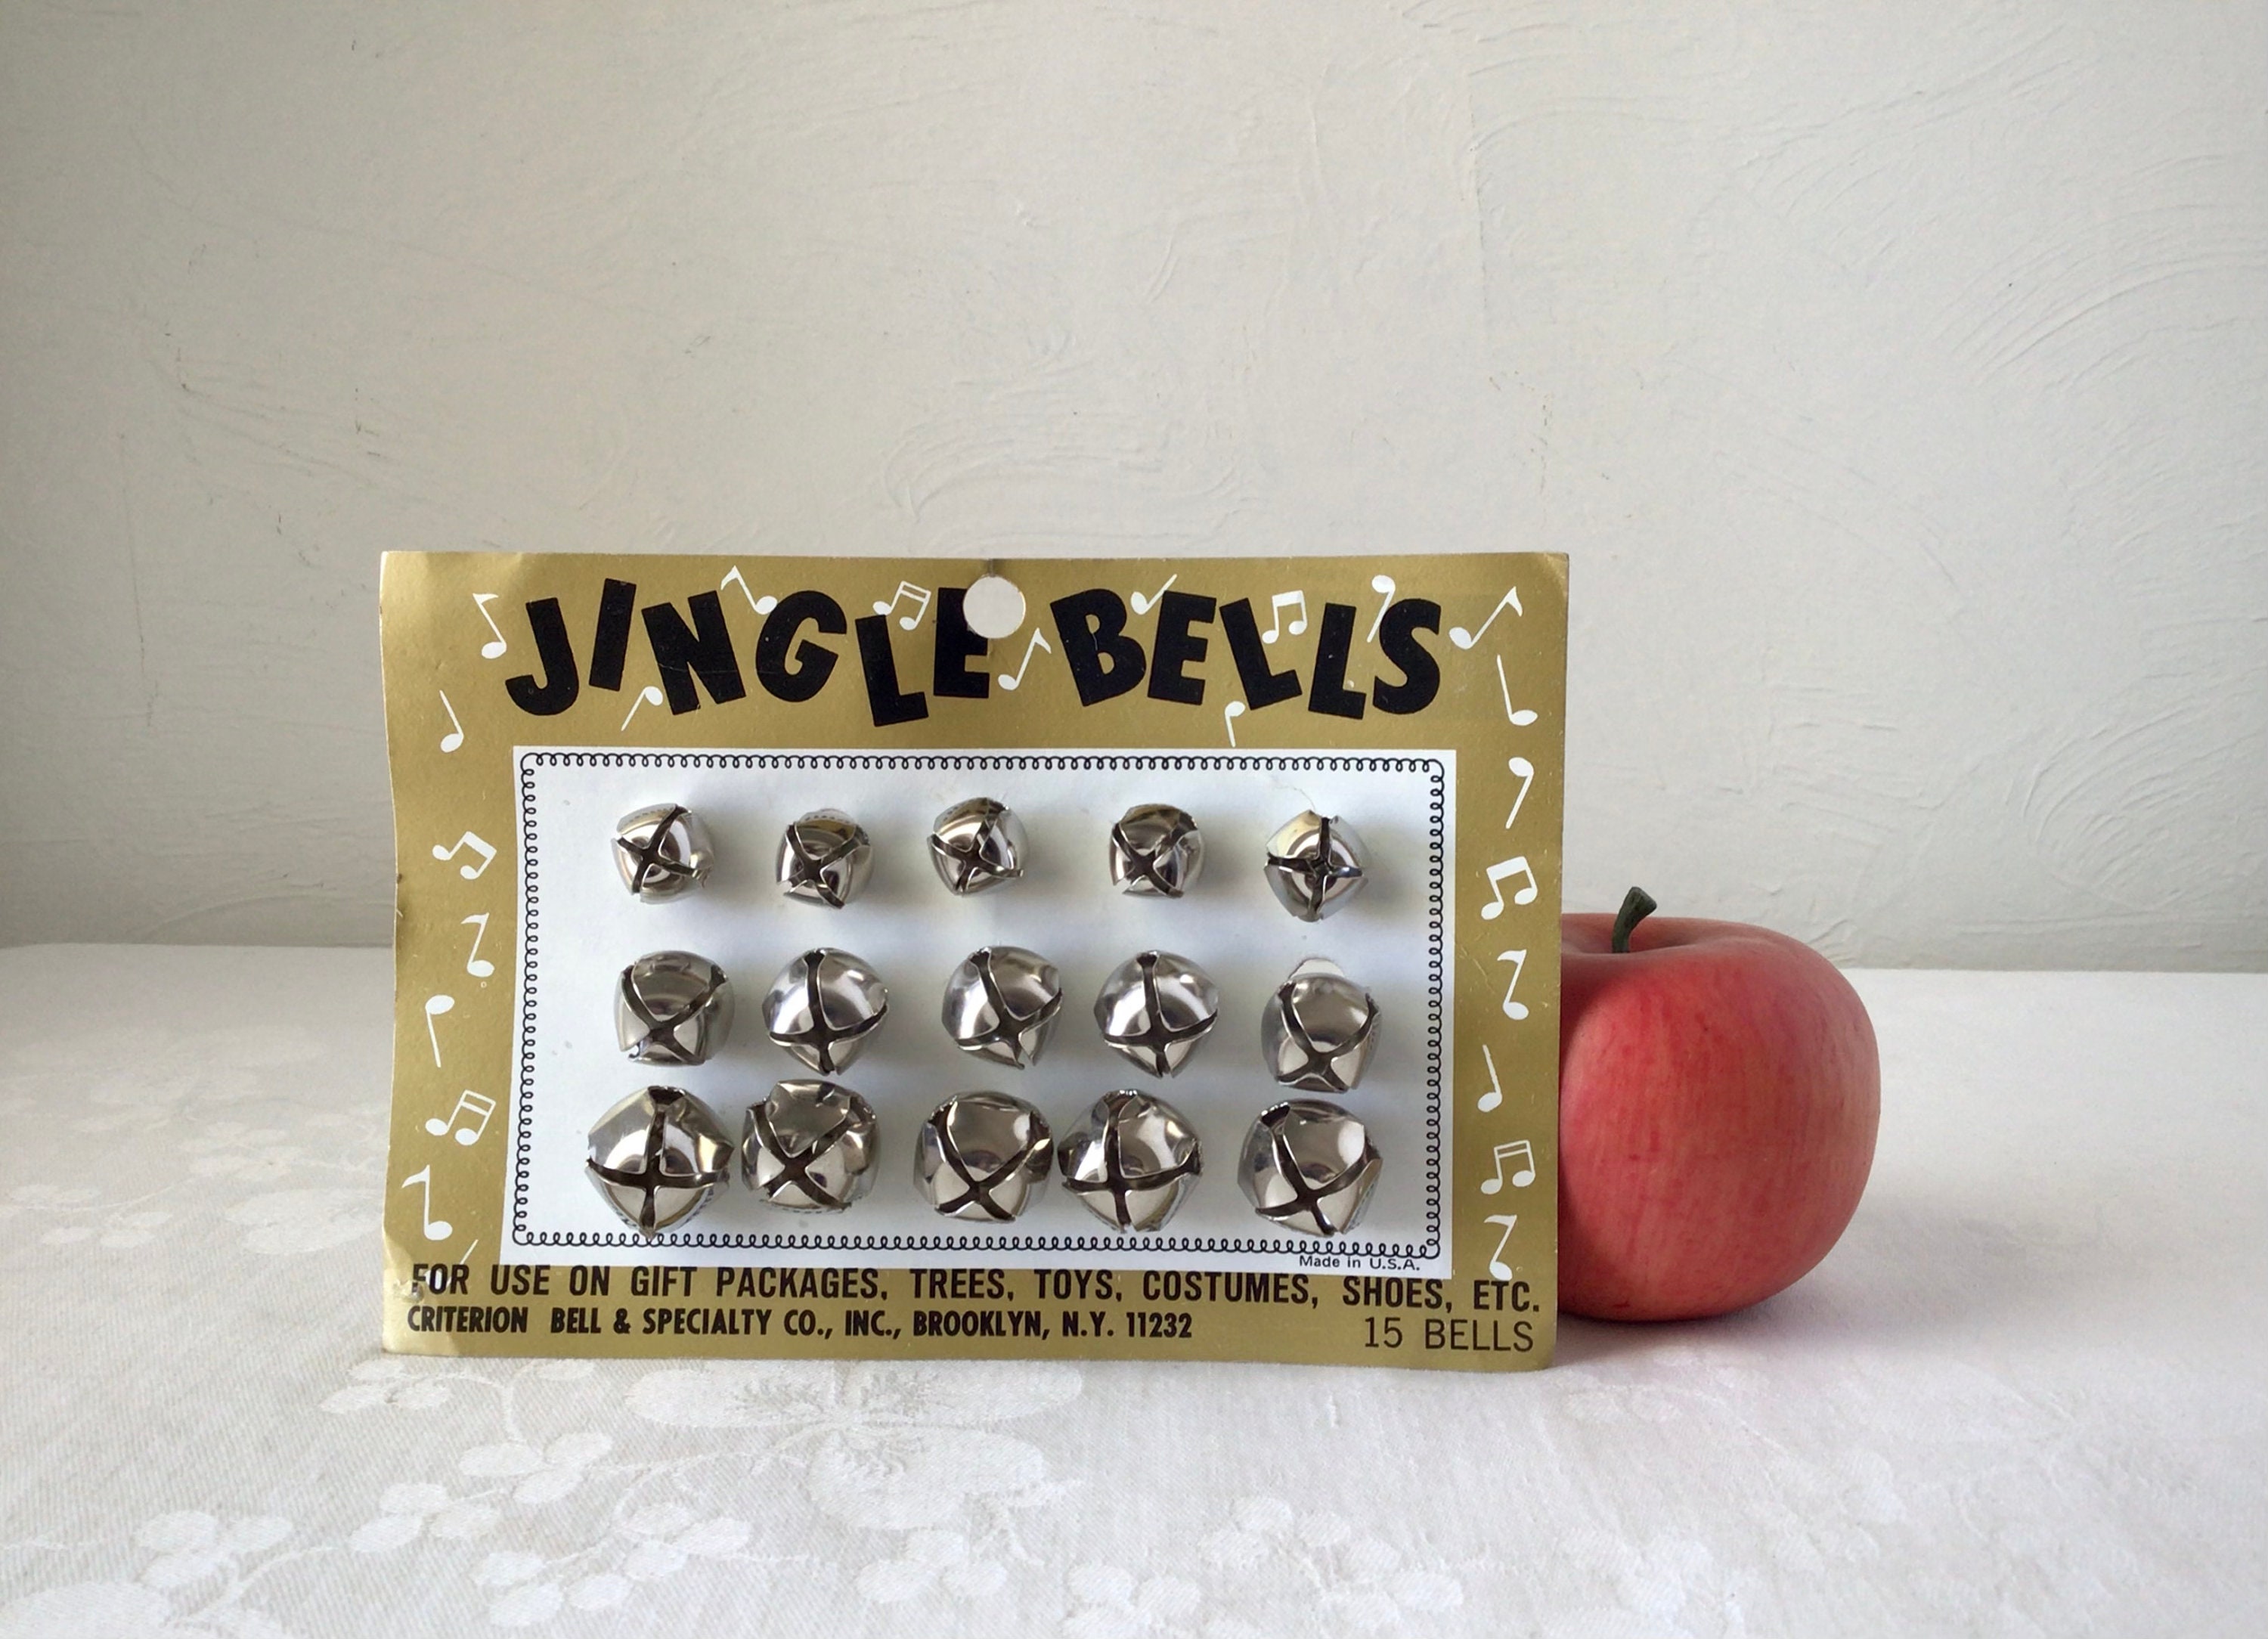 1 inch 25mm Silver Craft Jingle Bells Bulk 100 Pieces